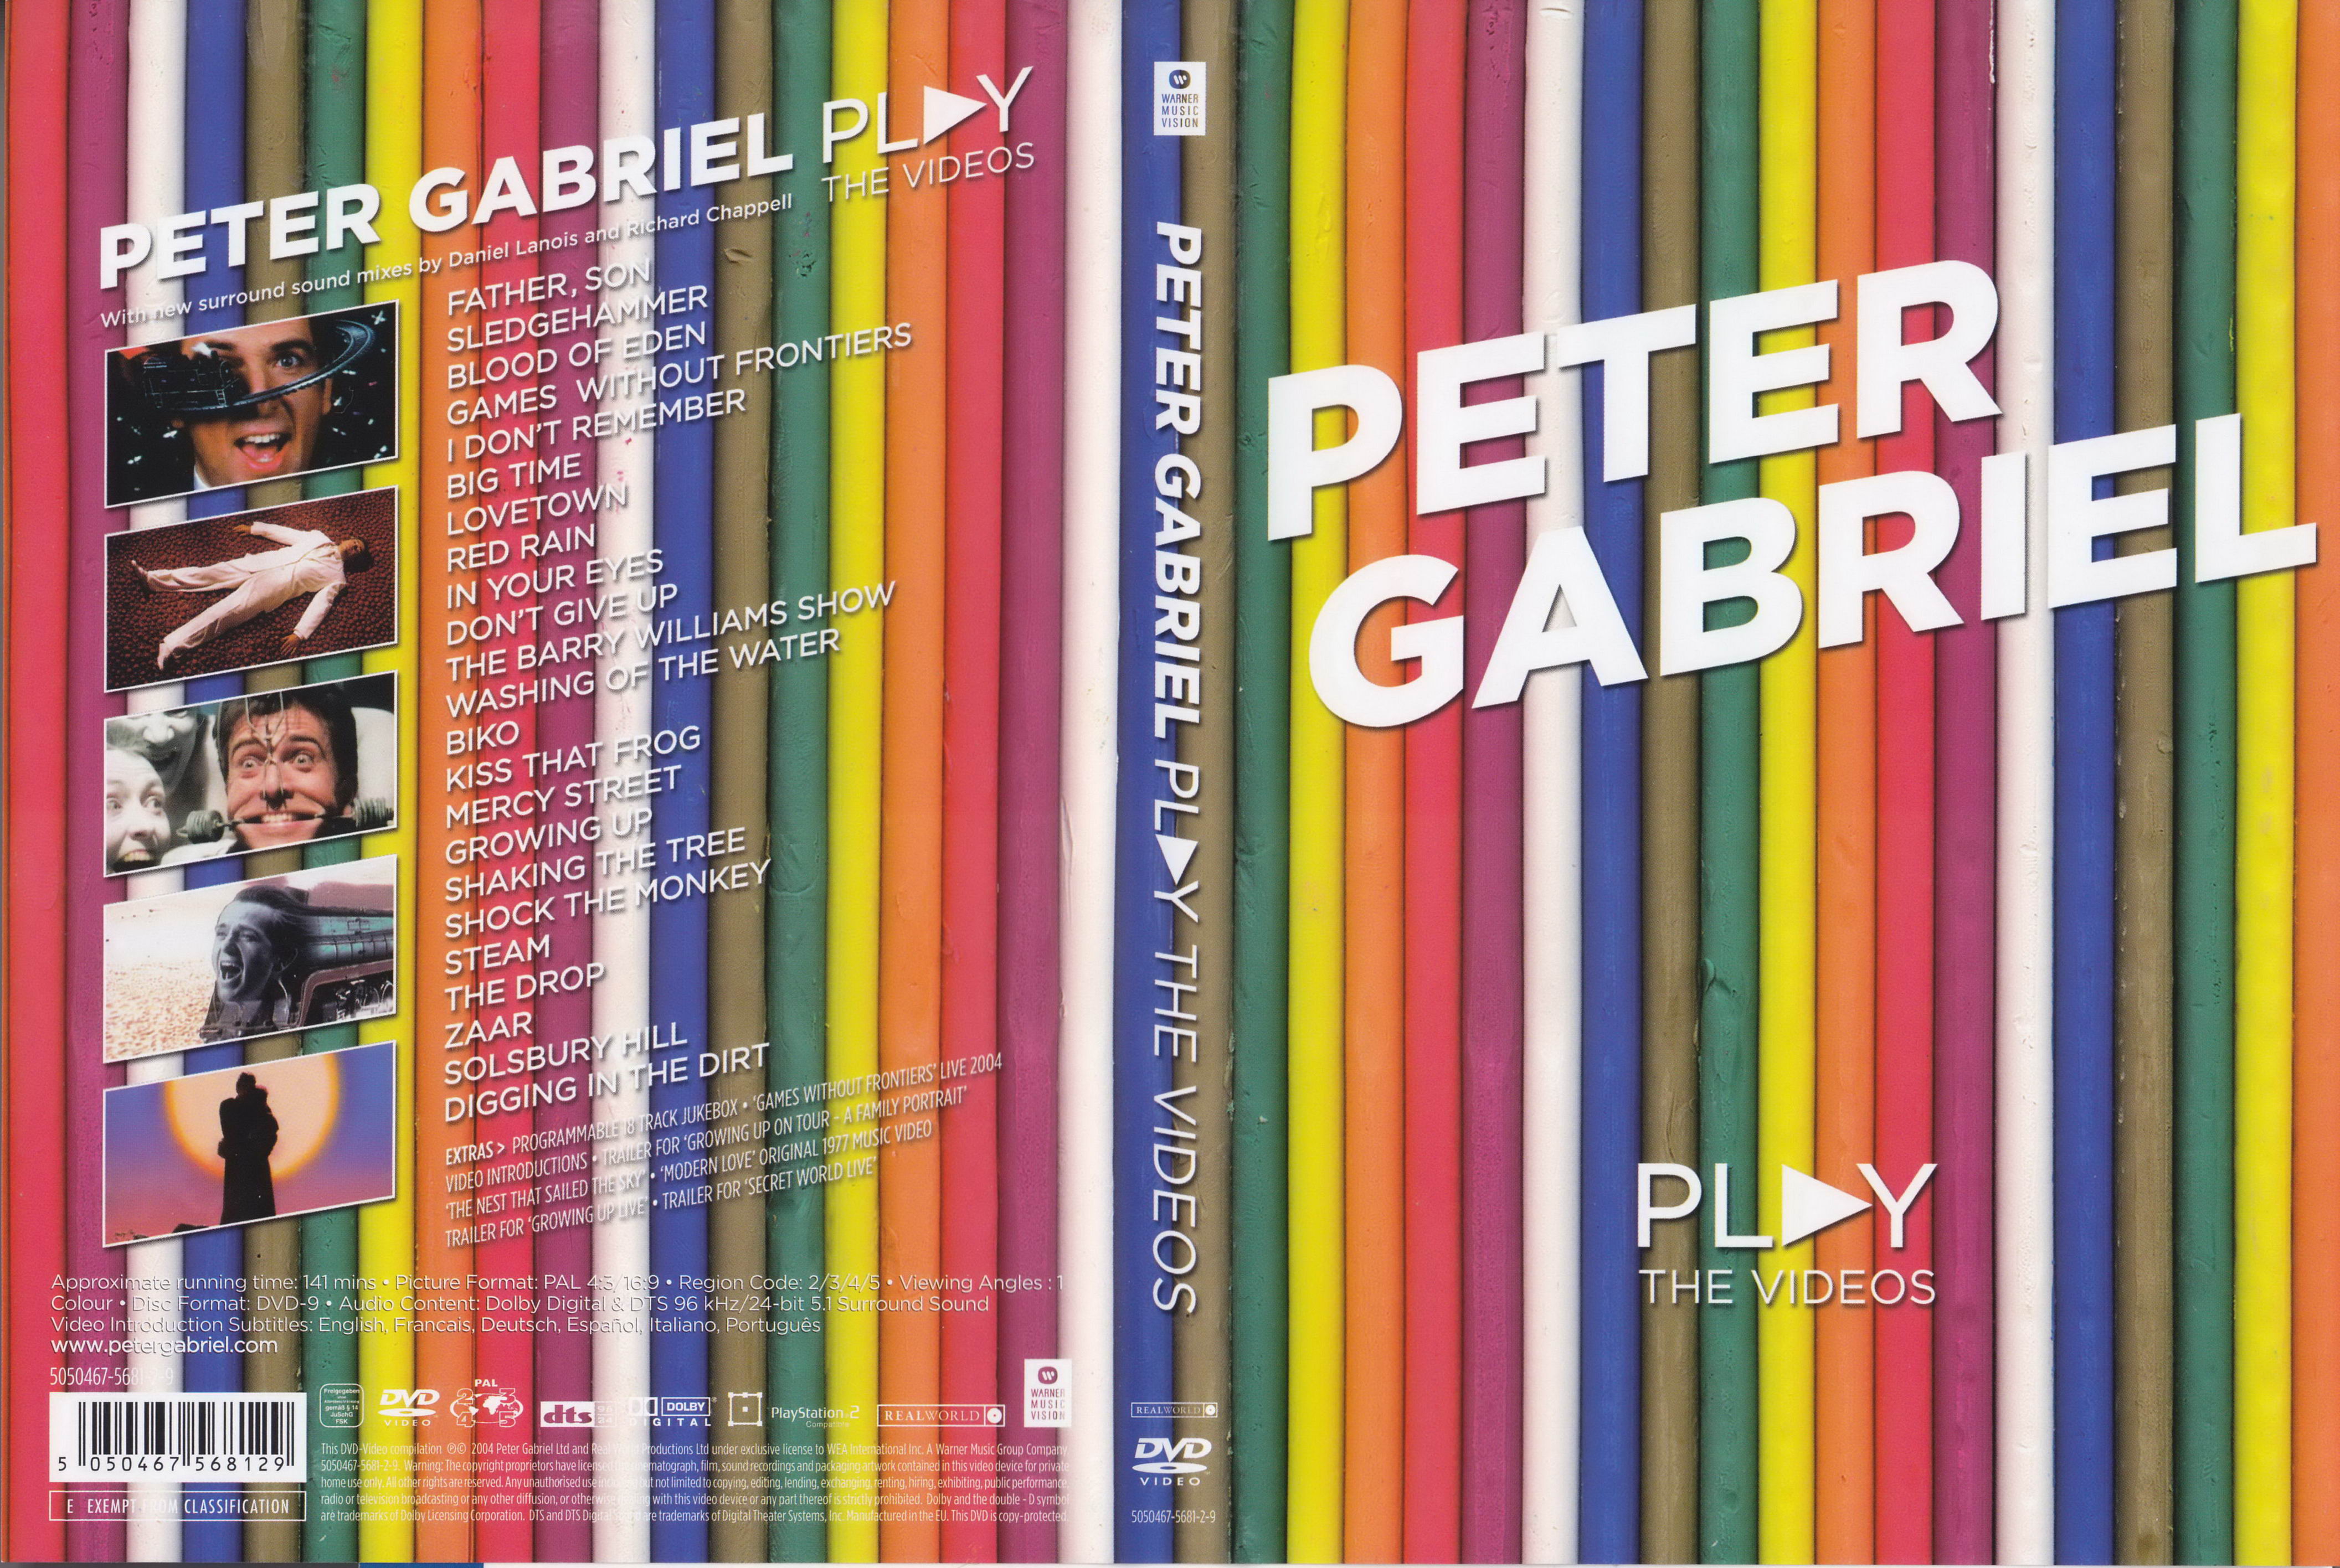 Jaquette DVD Peter Gabriel - Play the videos